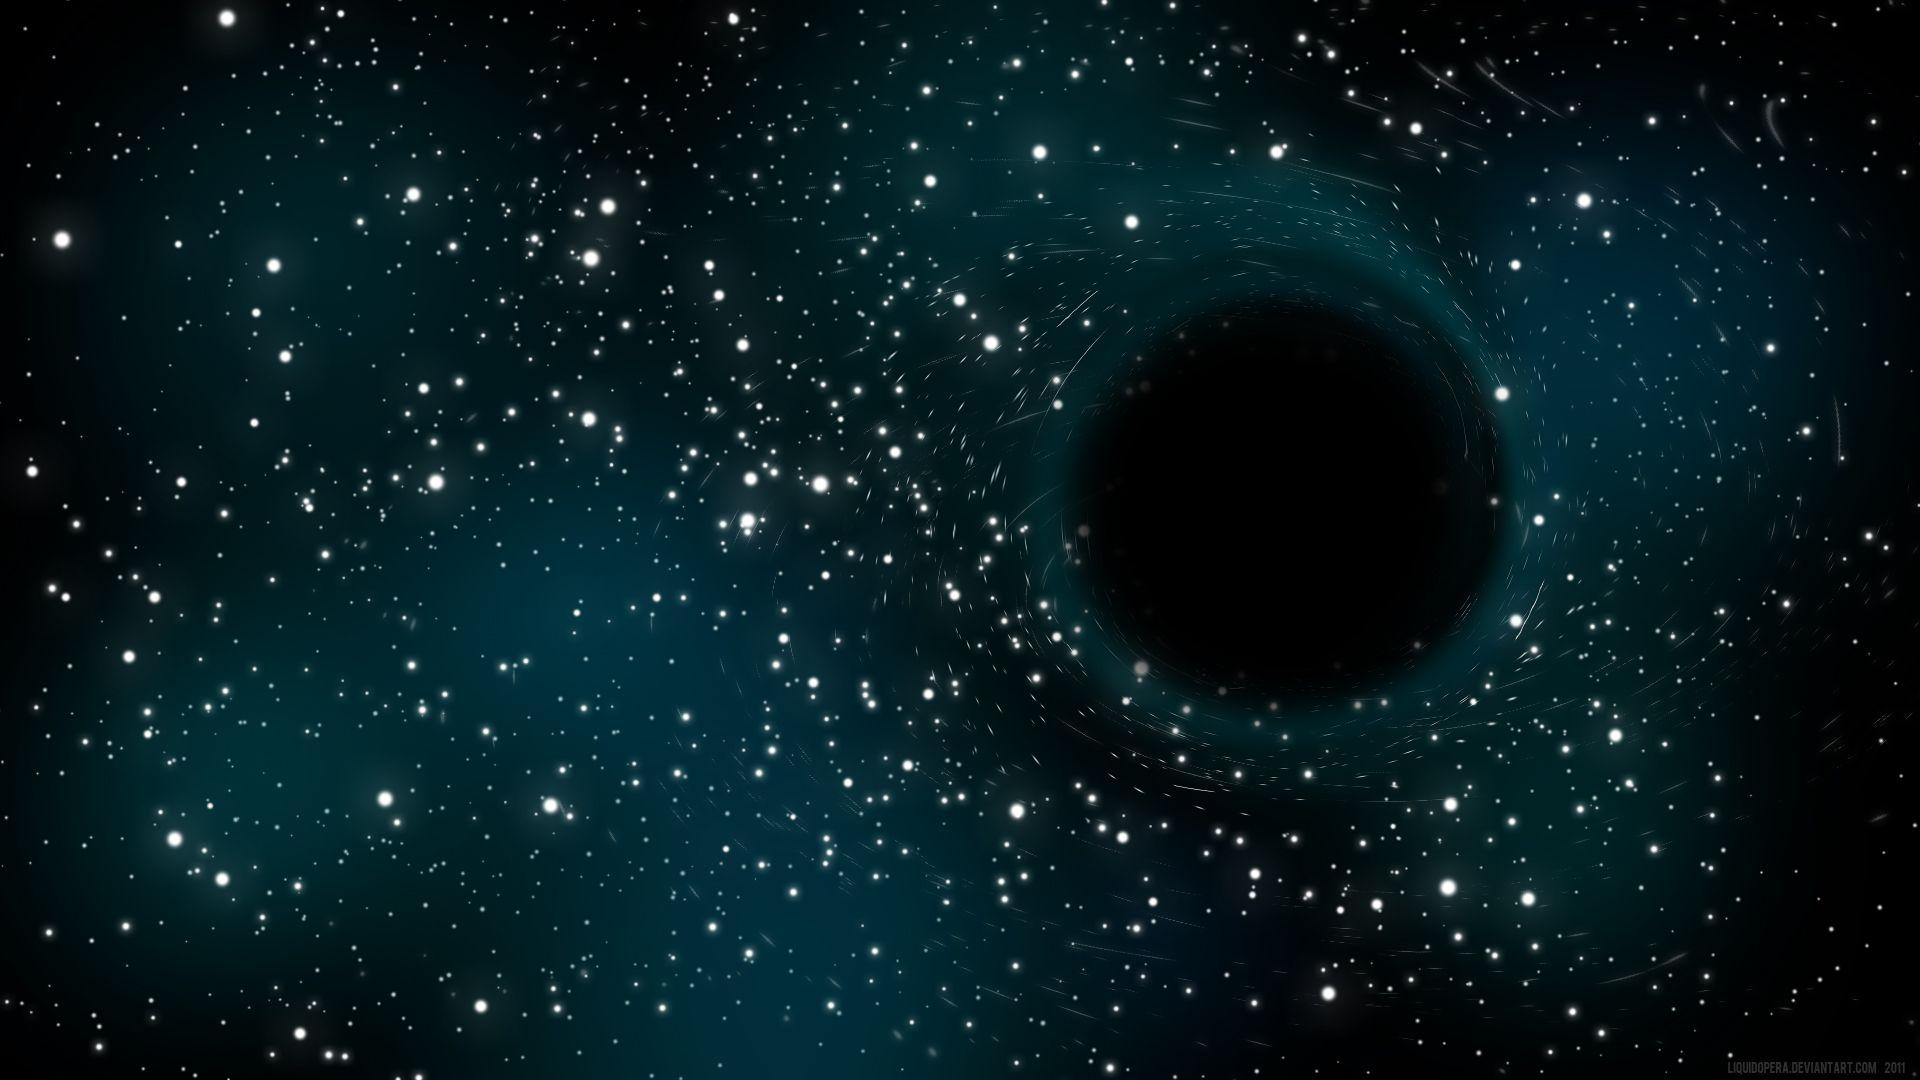 Supermassive Black Hole Wallpaper 25247 HD Wallpaper. THE VERY